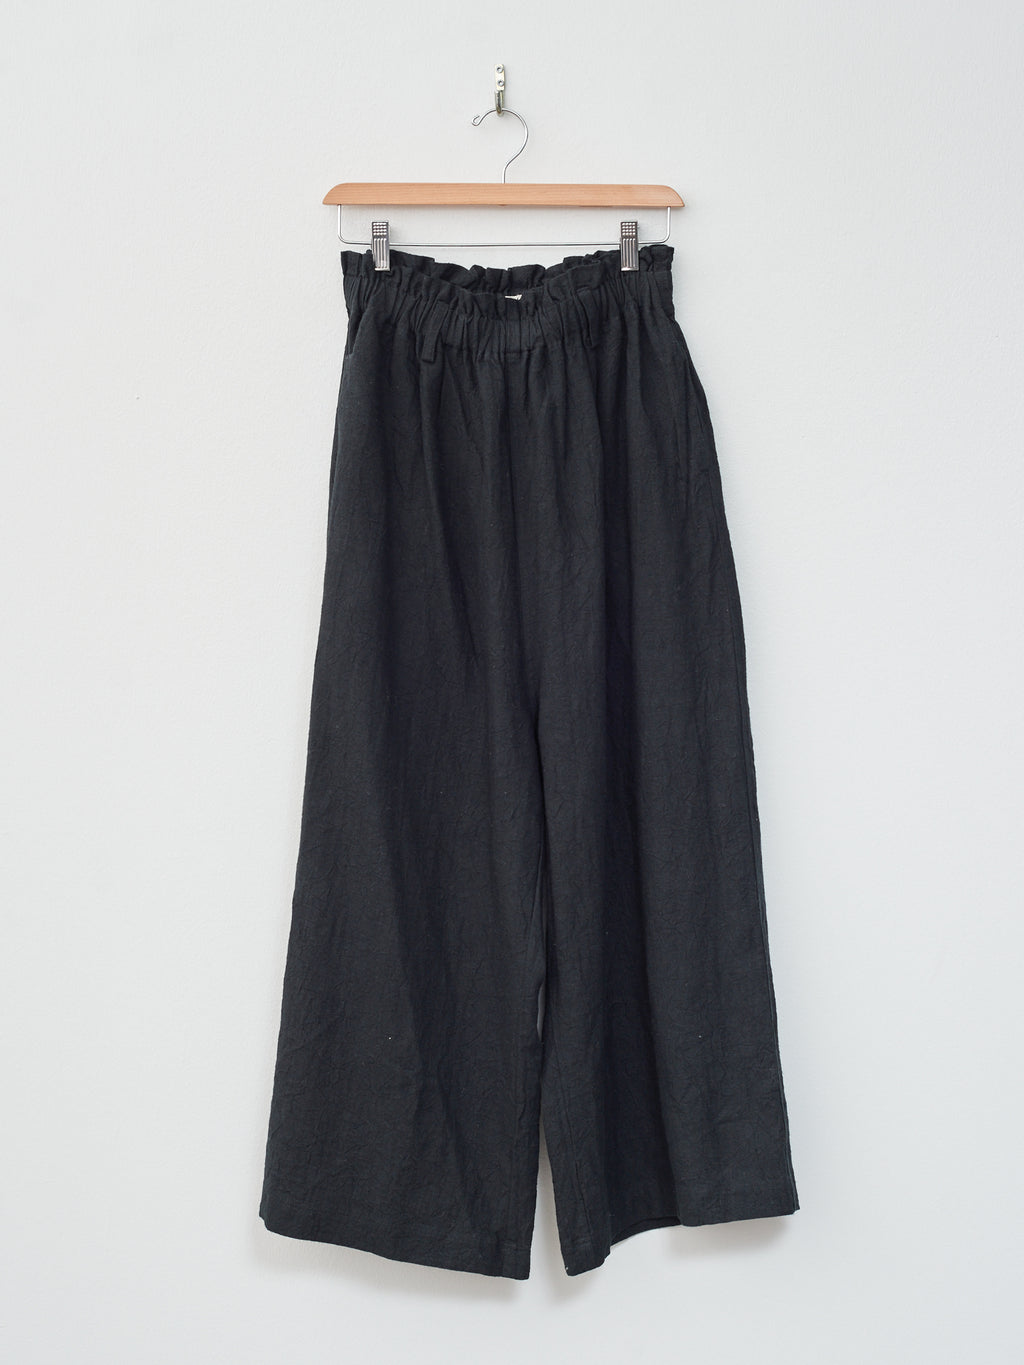 Namu Shop - Ichi Antiquites Linen Vintage Pants - Black